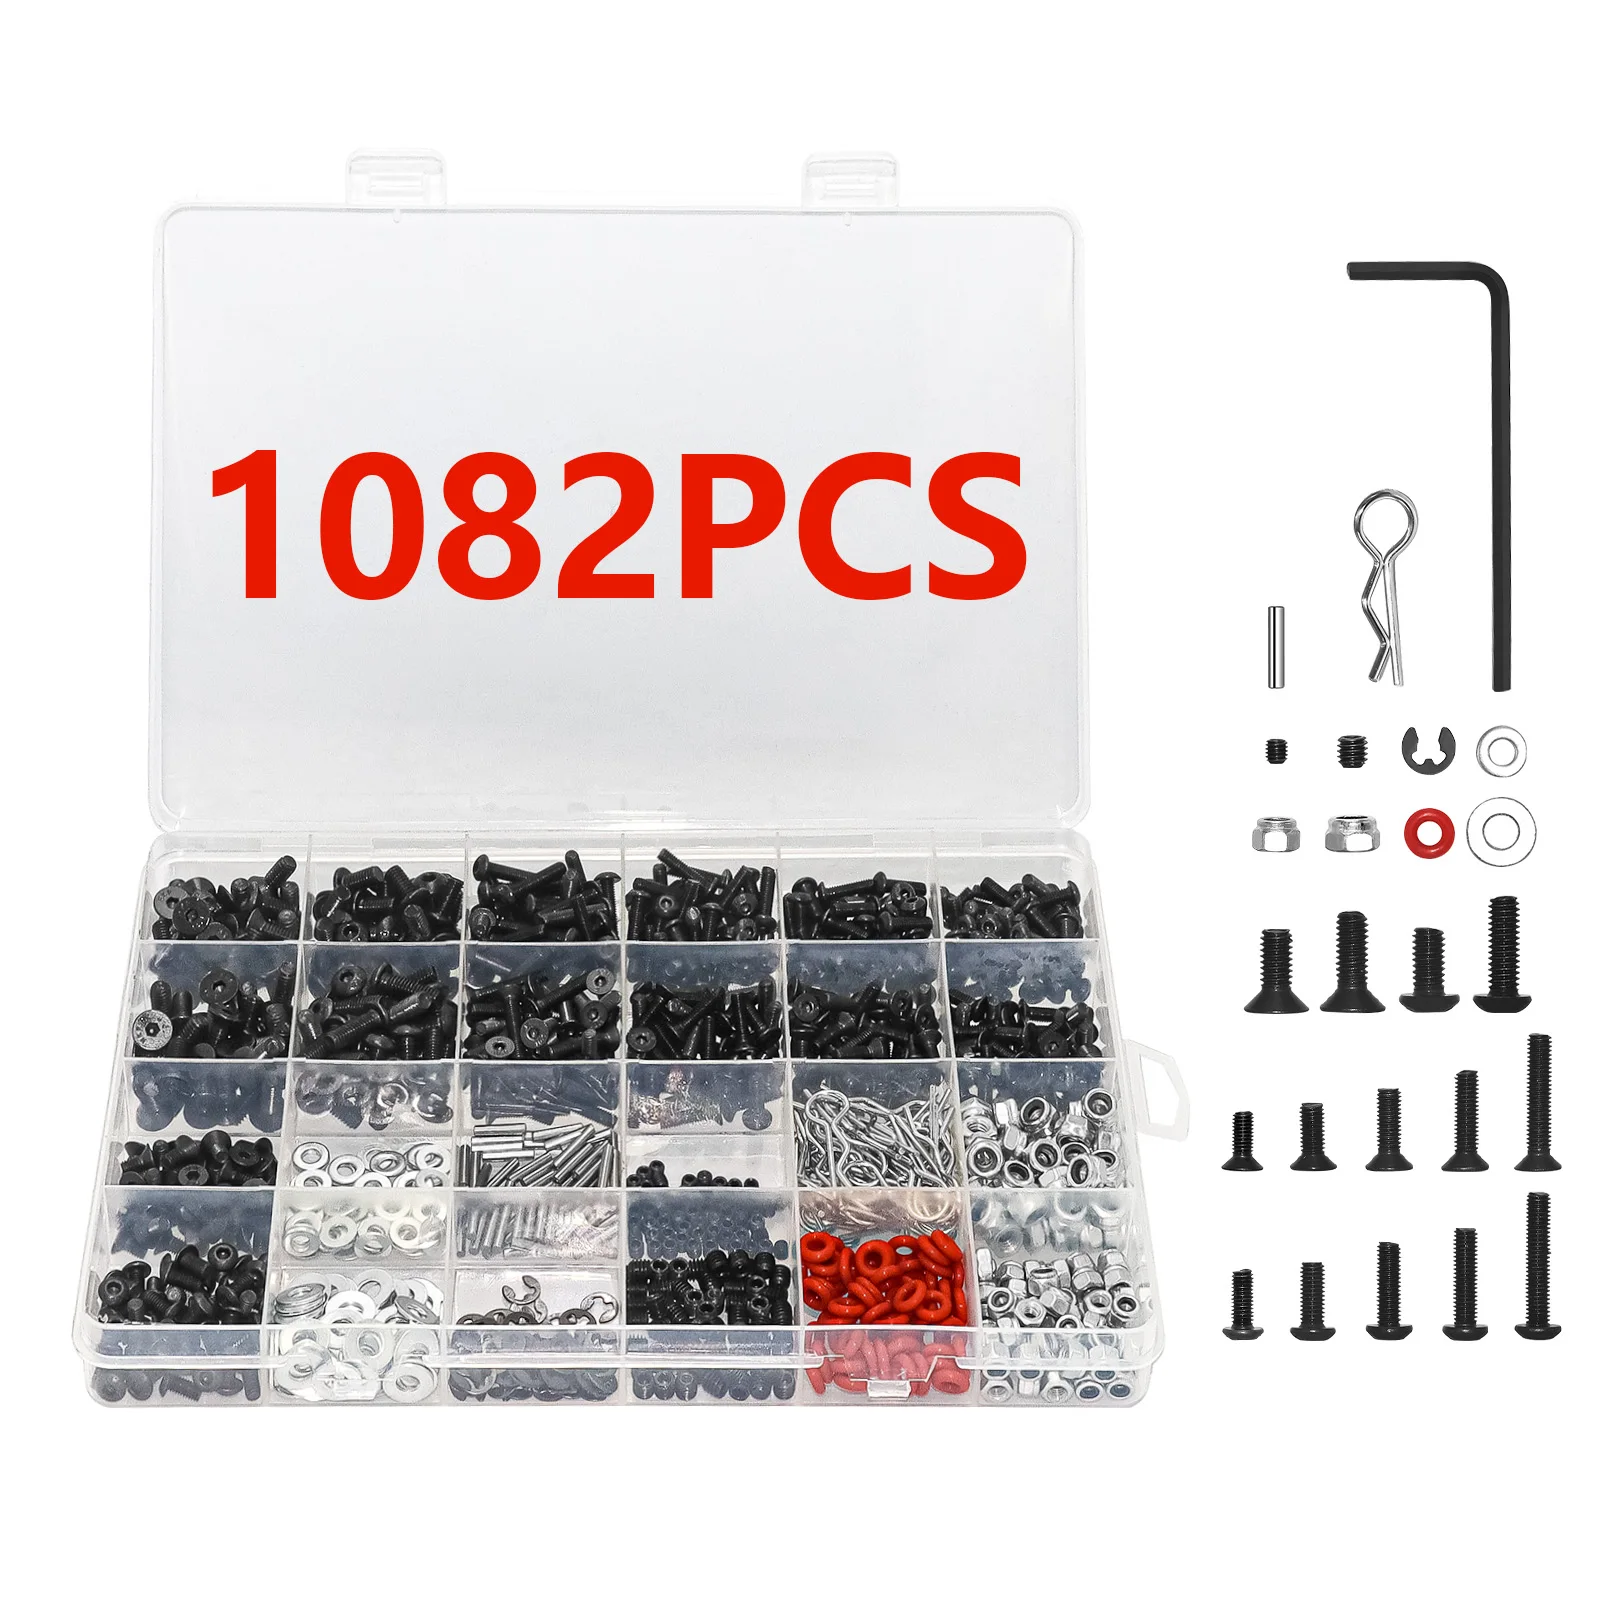 1082pcs Universal RC Screw Kit with Storage Box Screws Assortment Set, Repair Tool Hardware Fasteners for 1/8 1/10 1/12 1/16 car